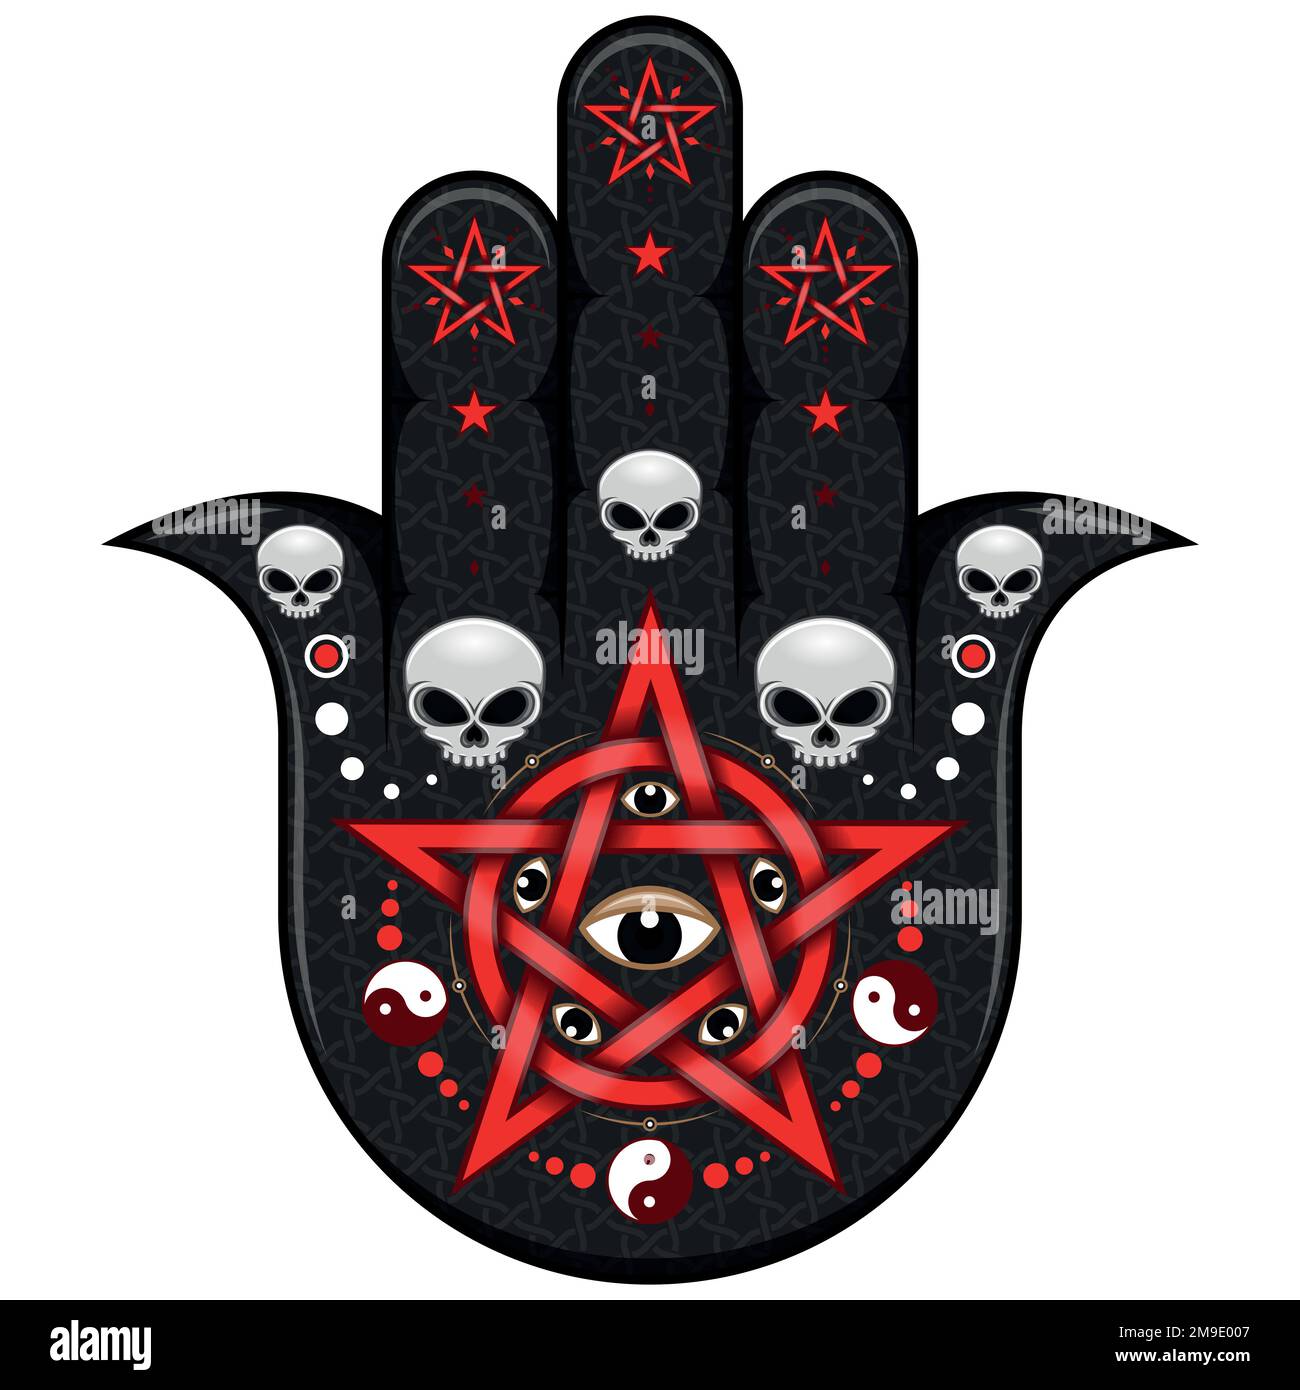 Hamsa protection symbol vector design, hand of fatima symbol, illustration of Jamsa with god's eye Stock Vector